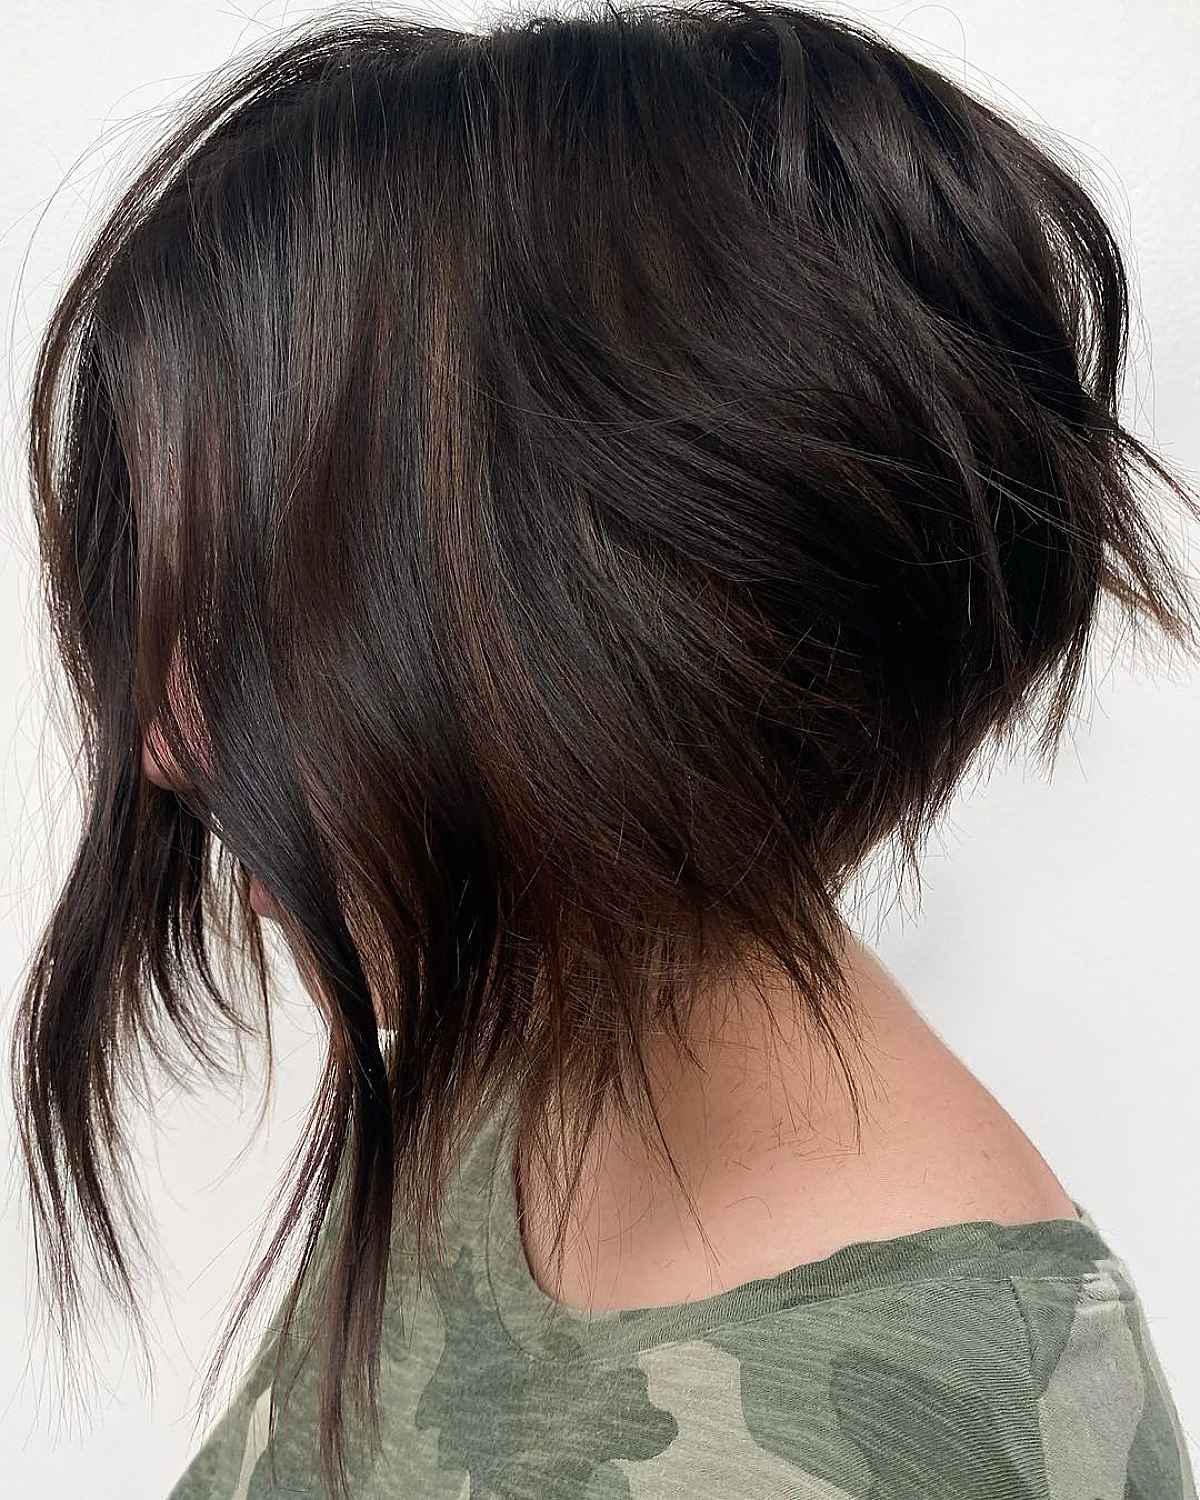 A-line Cut with Choppy Ends on Thin Hair